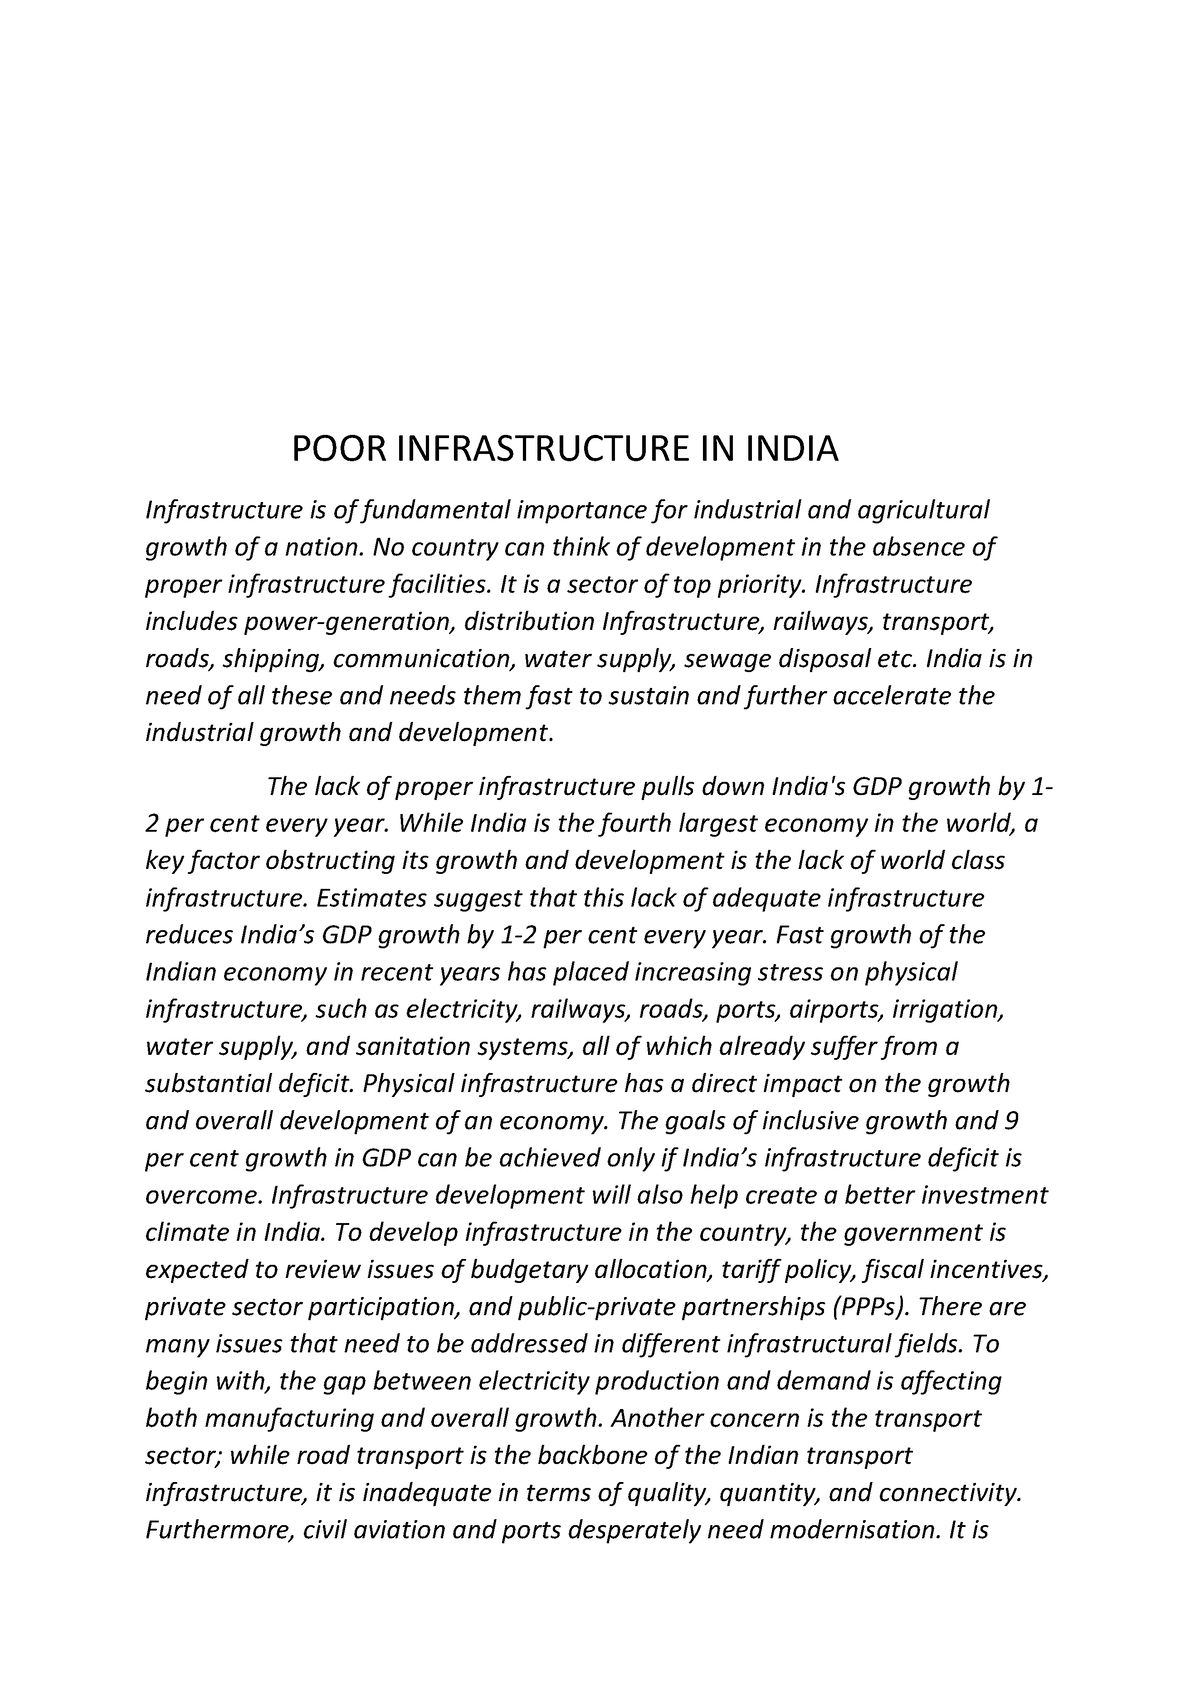 essay on poor infrastructure in india